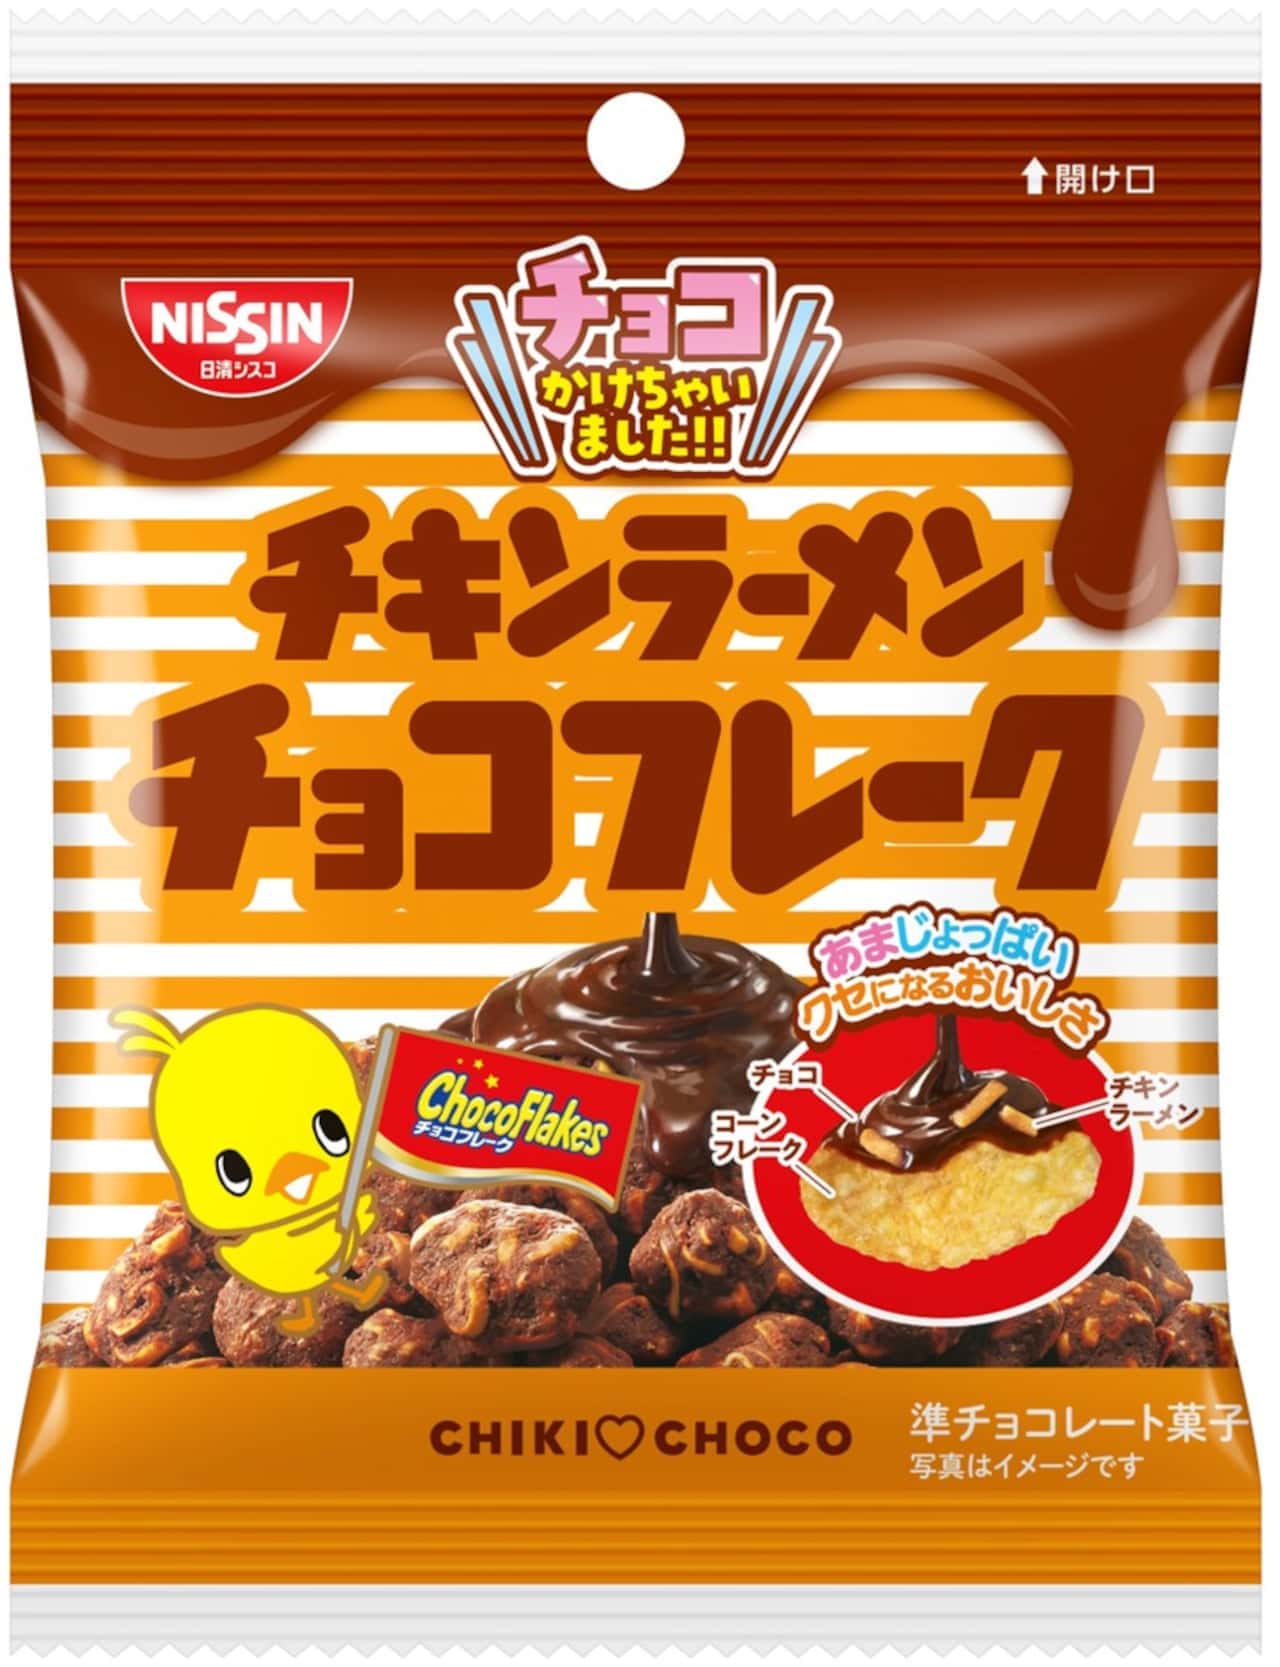 Nissin Sysco "Chicken Ramen Choco Flake